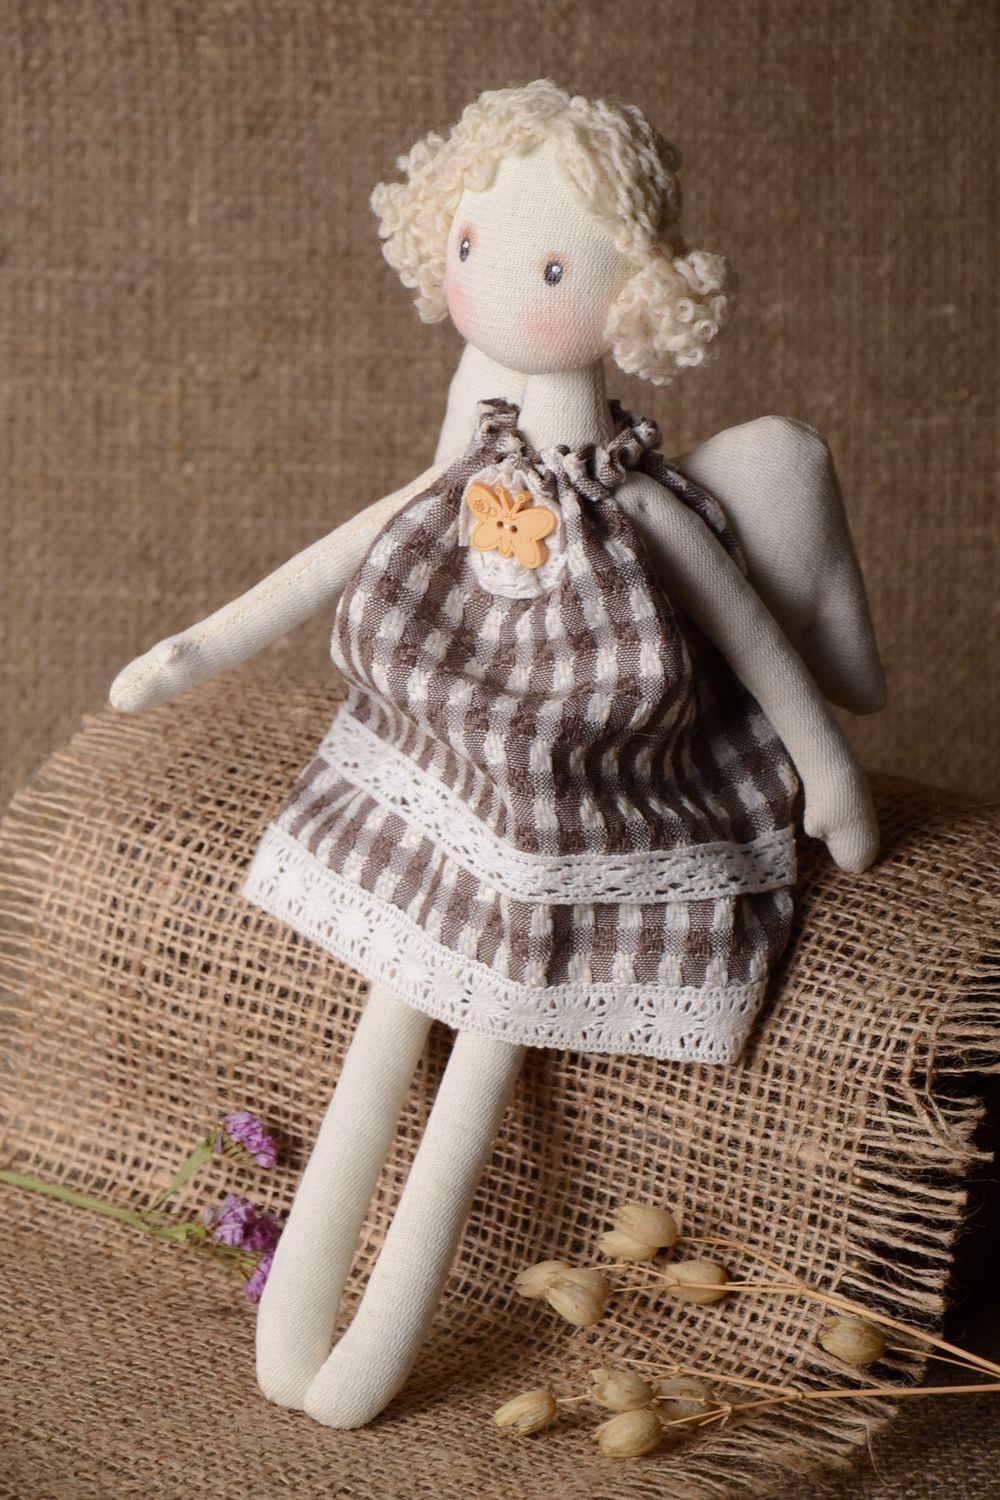 Soft doll handmade stuffed toy for children nursery decor ideas home decor photo 1